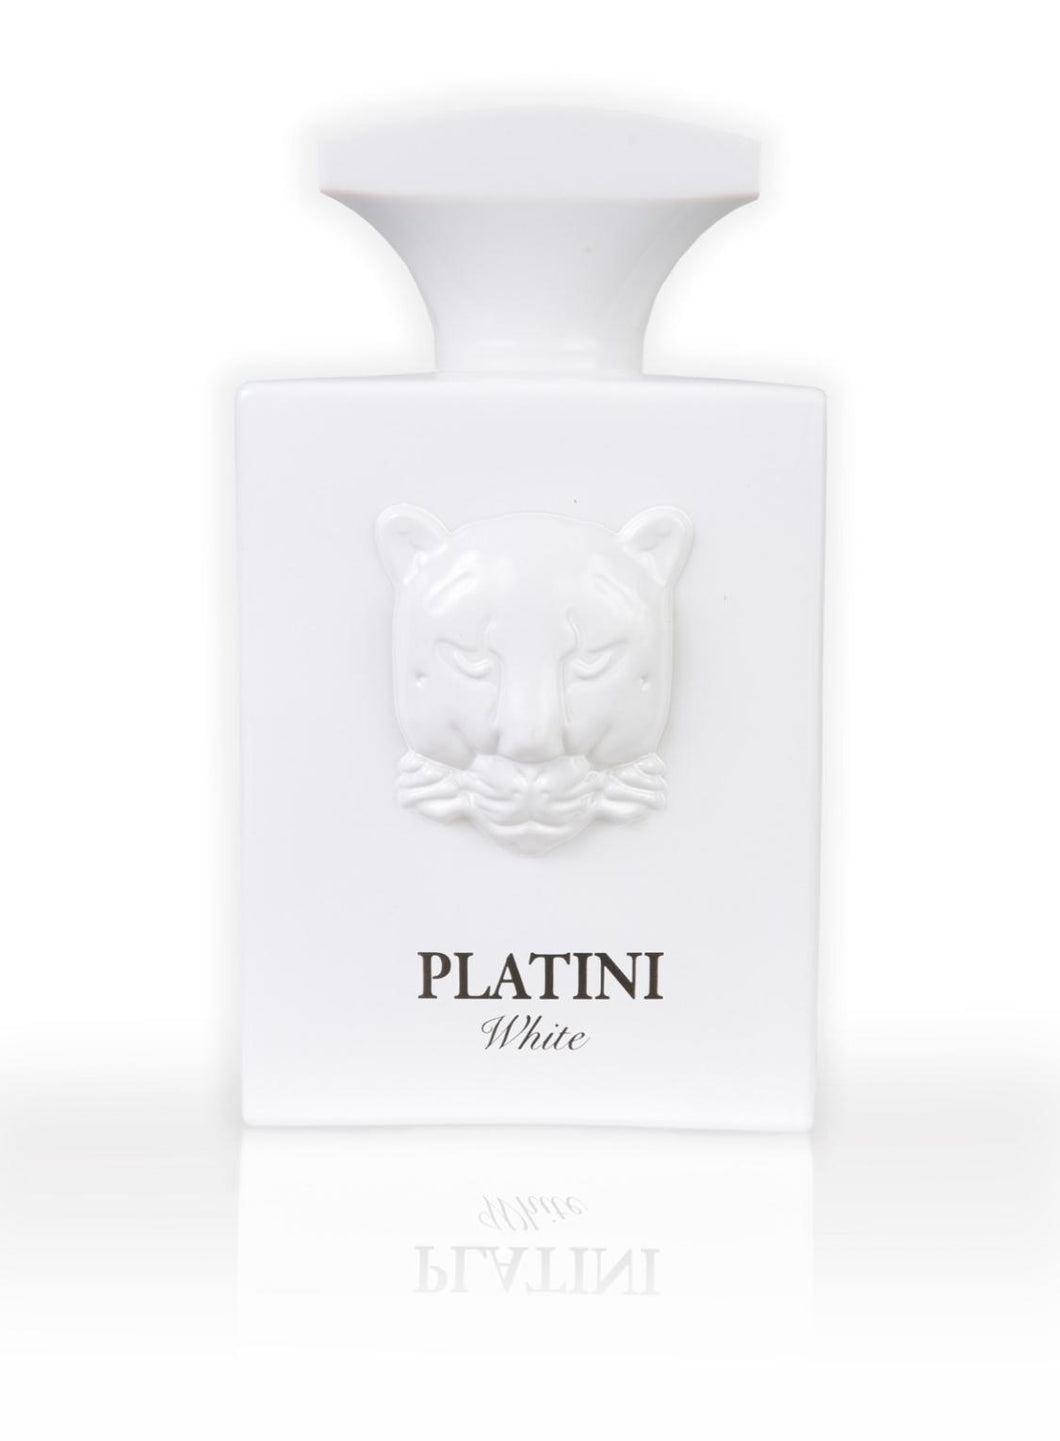 Platini White Perfume